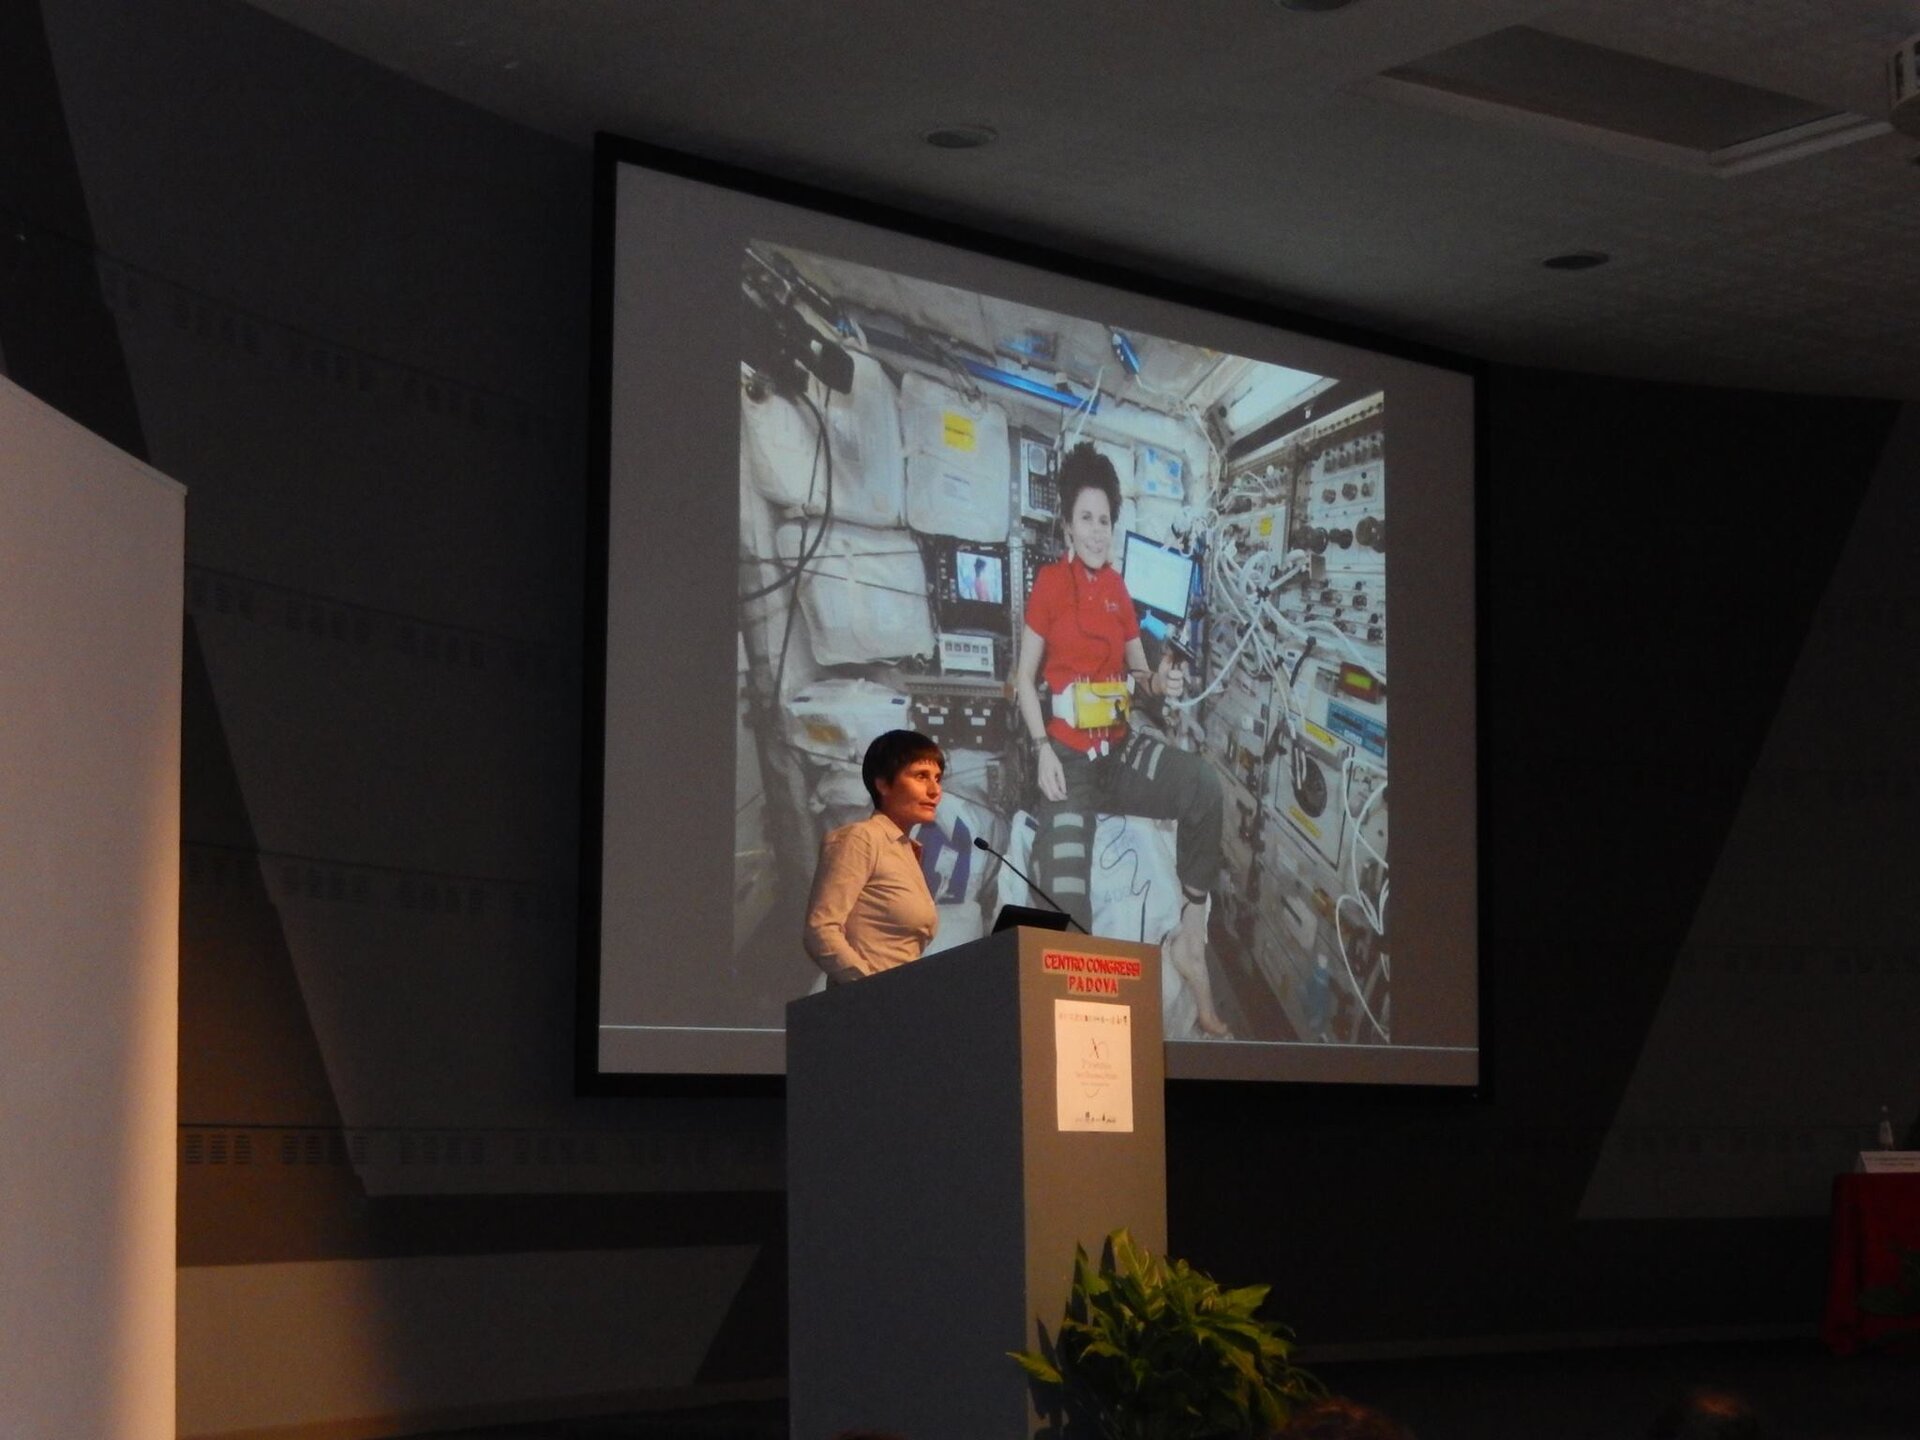 ESA Astronaut Samantha Cristoforetti at the 1st Symposium